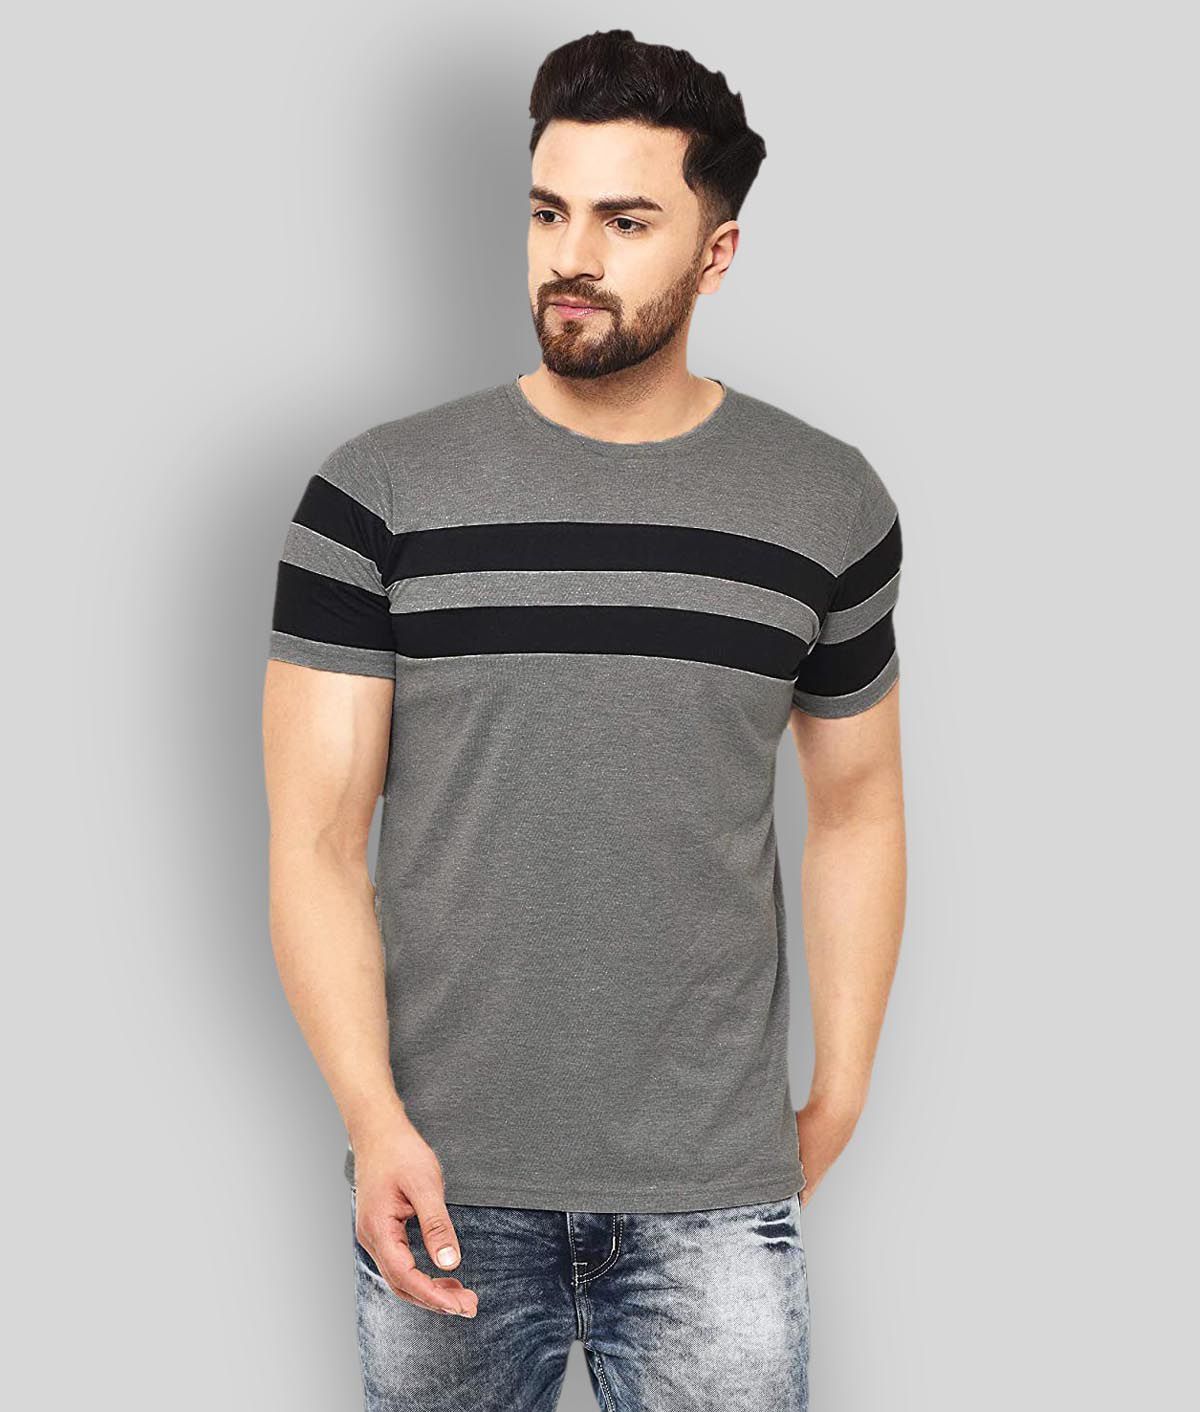 Buy Leotude - Multicolor Cotton Regular Fit Men's T-Shirt ( Pack of 3 ...